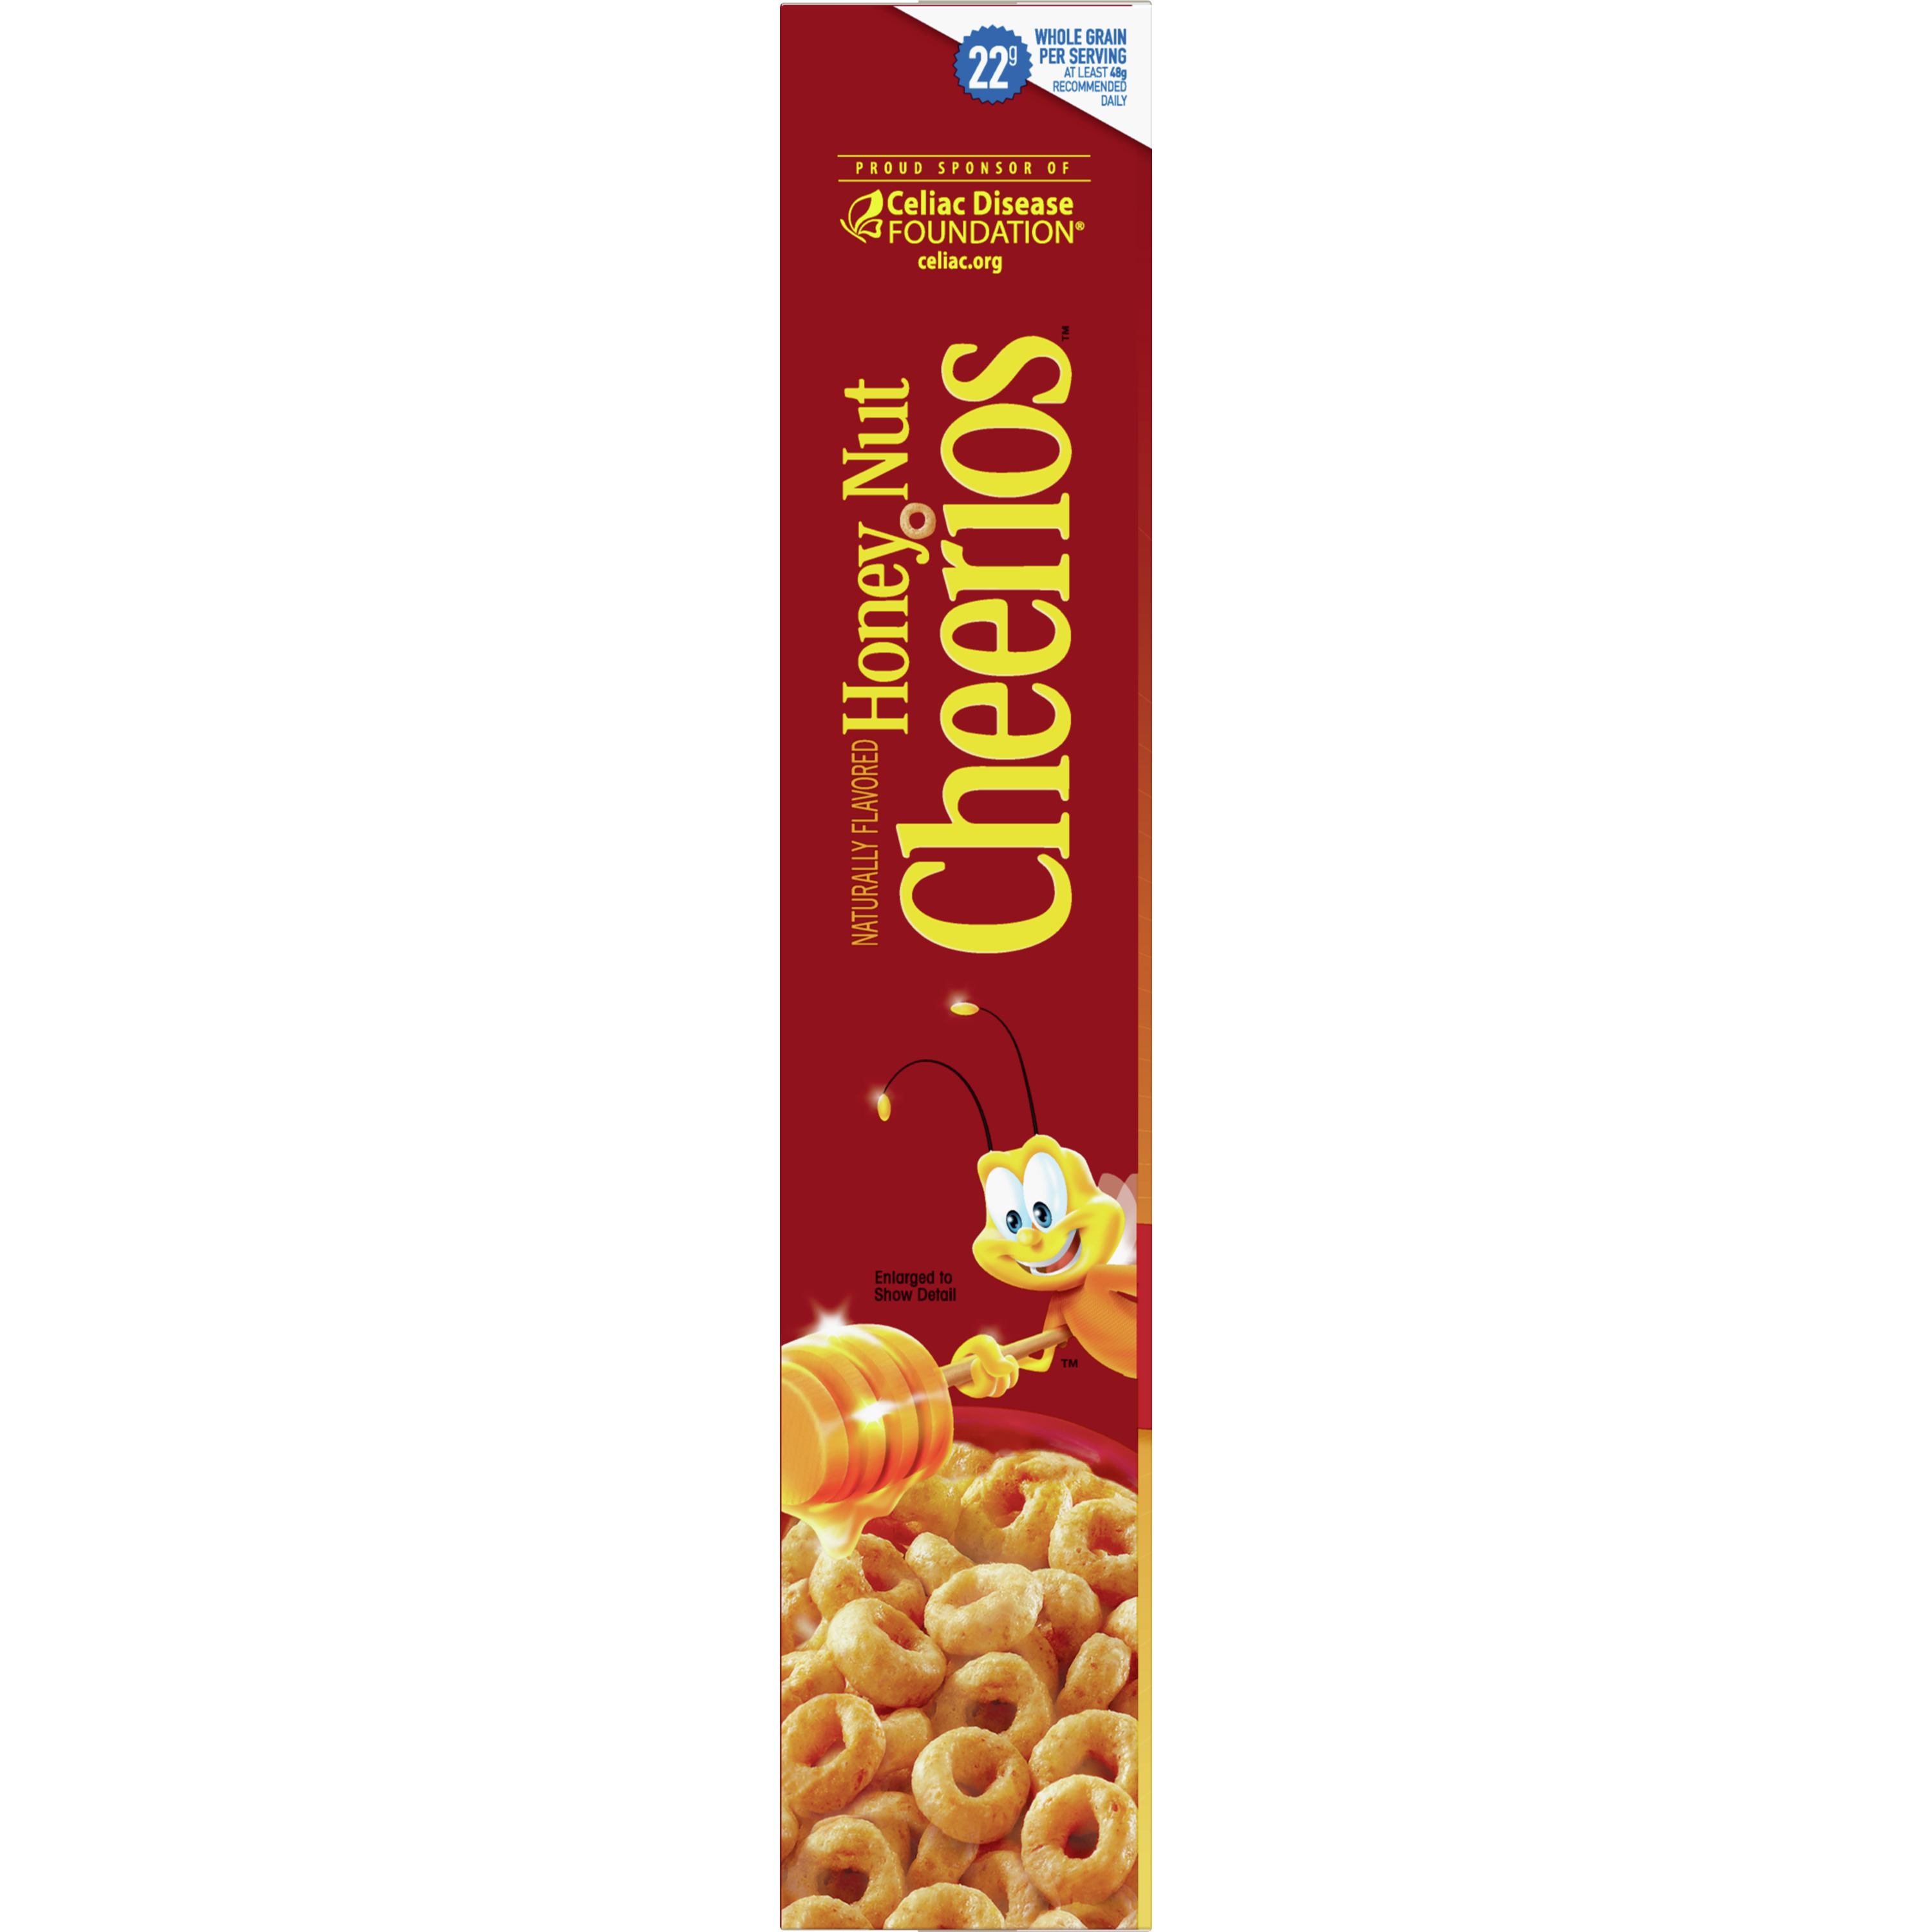 Honey Nut Cheerios Gluten-Free Breakfast Cereal, 19.5 oz - image 5 of 9